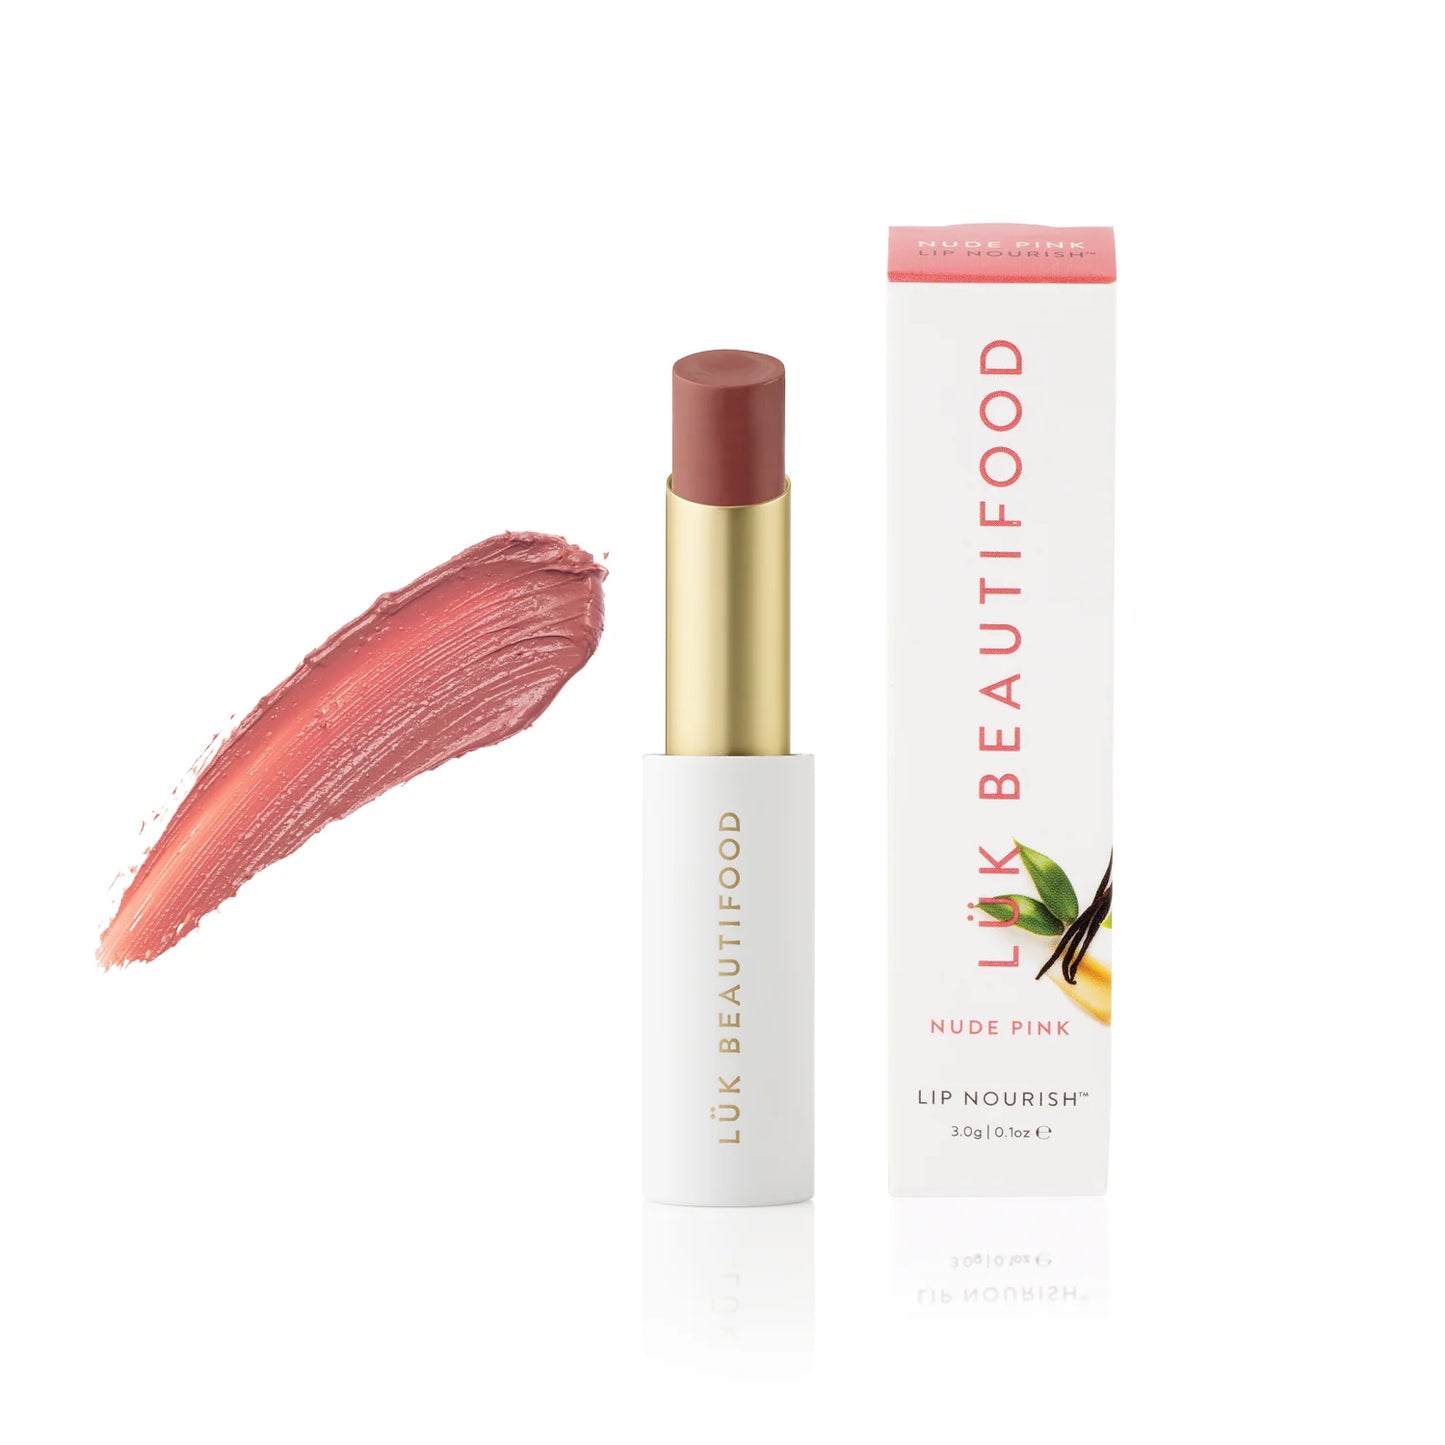 Lip Nourish™ - Nude Pink Caramel pink. Sheer coverage. Tastes of vanilla and cinnamon.